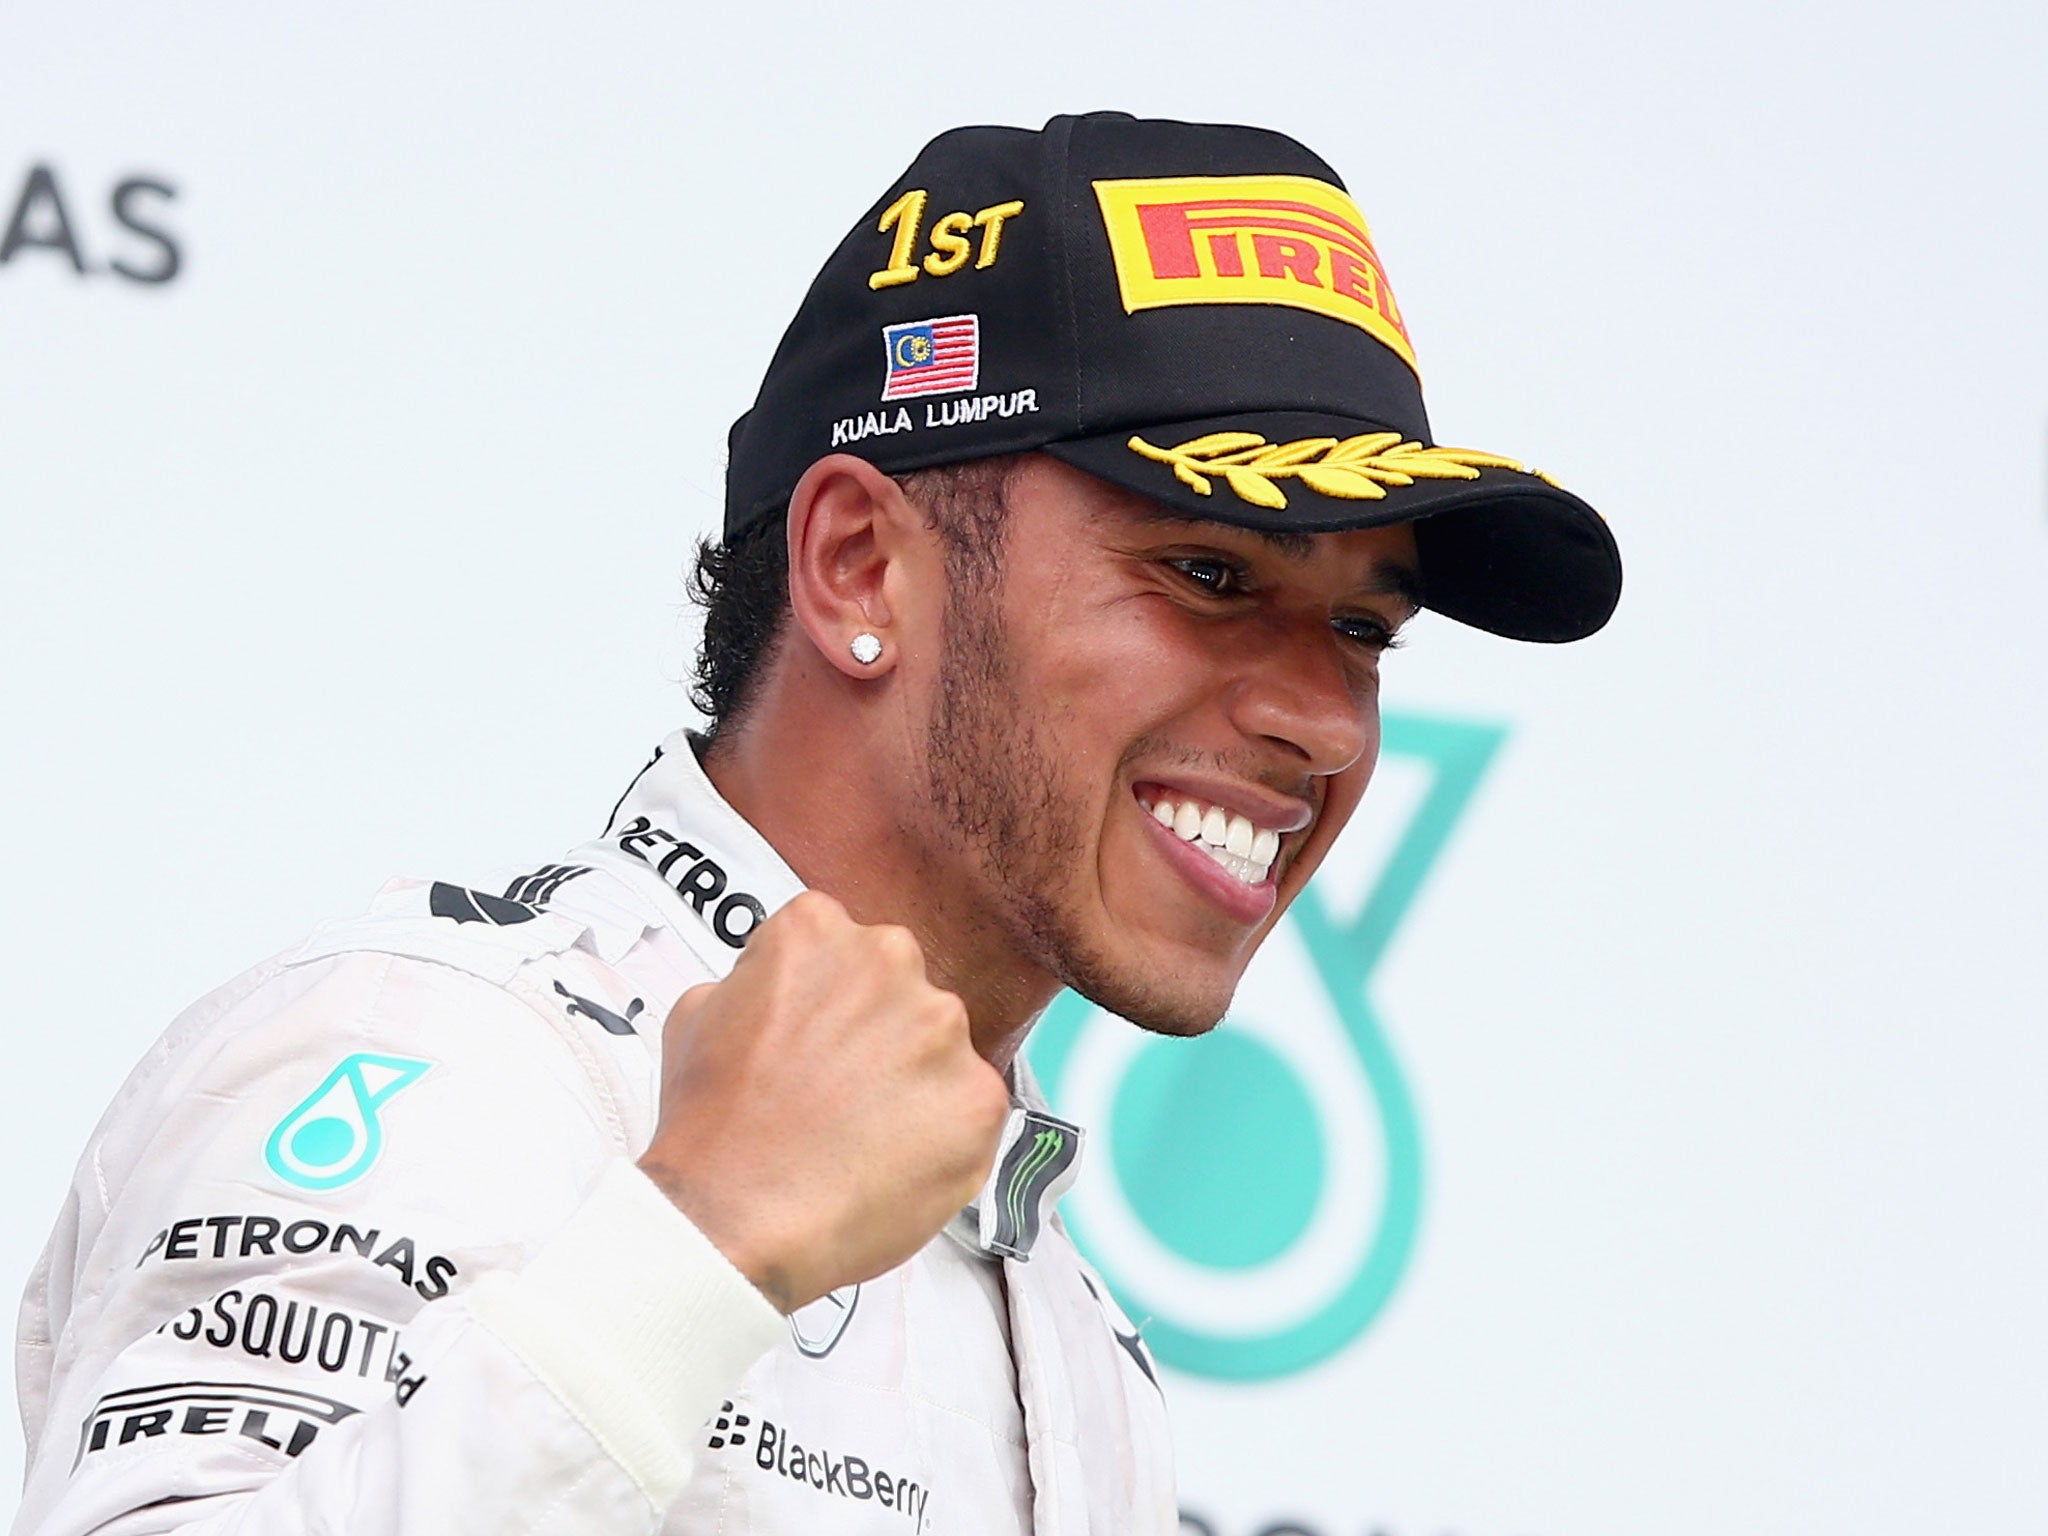 Lewis Hamilton celebrates on the podium after winning the Malaysia Grand Prix